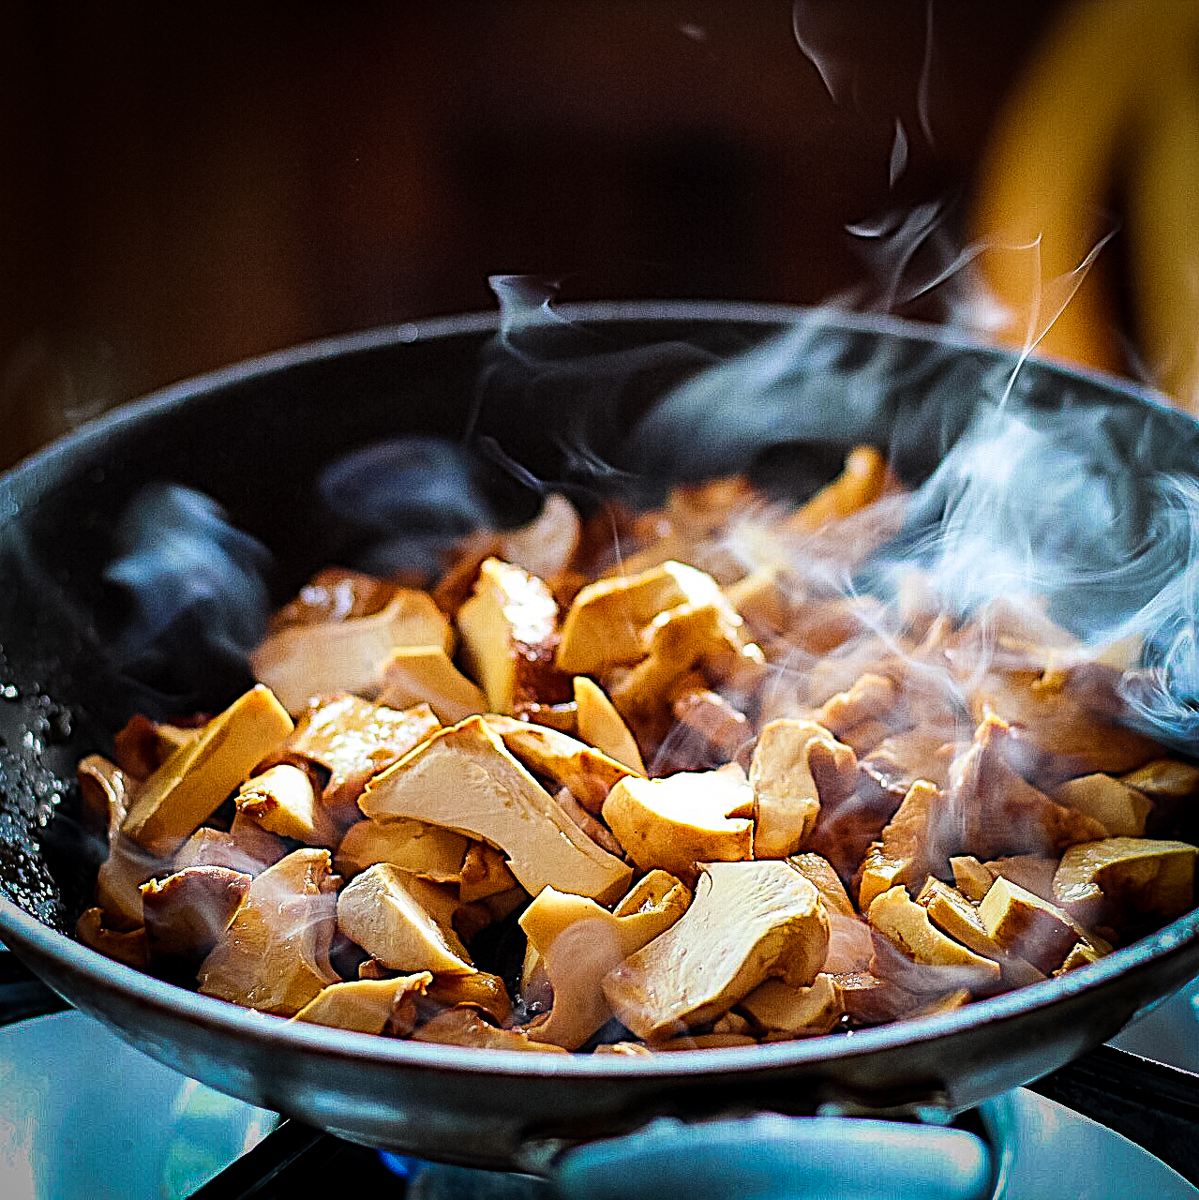 Chanterelle mushrooms frying in a black pan. Steam is rising off the pale orange mushrooms.